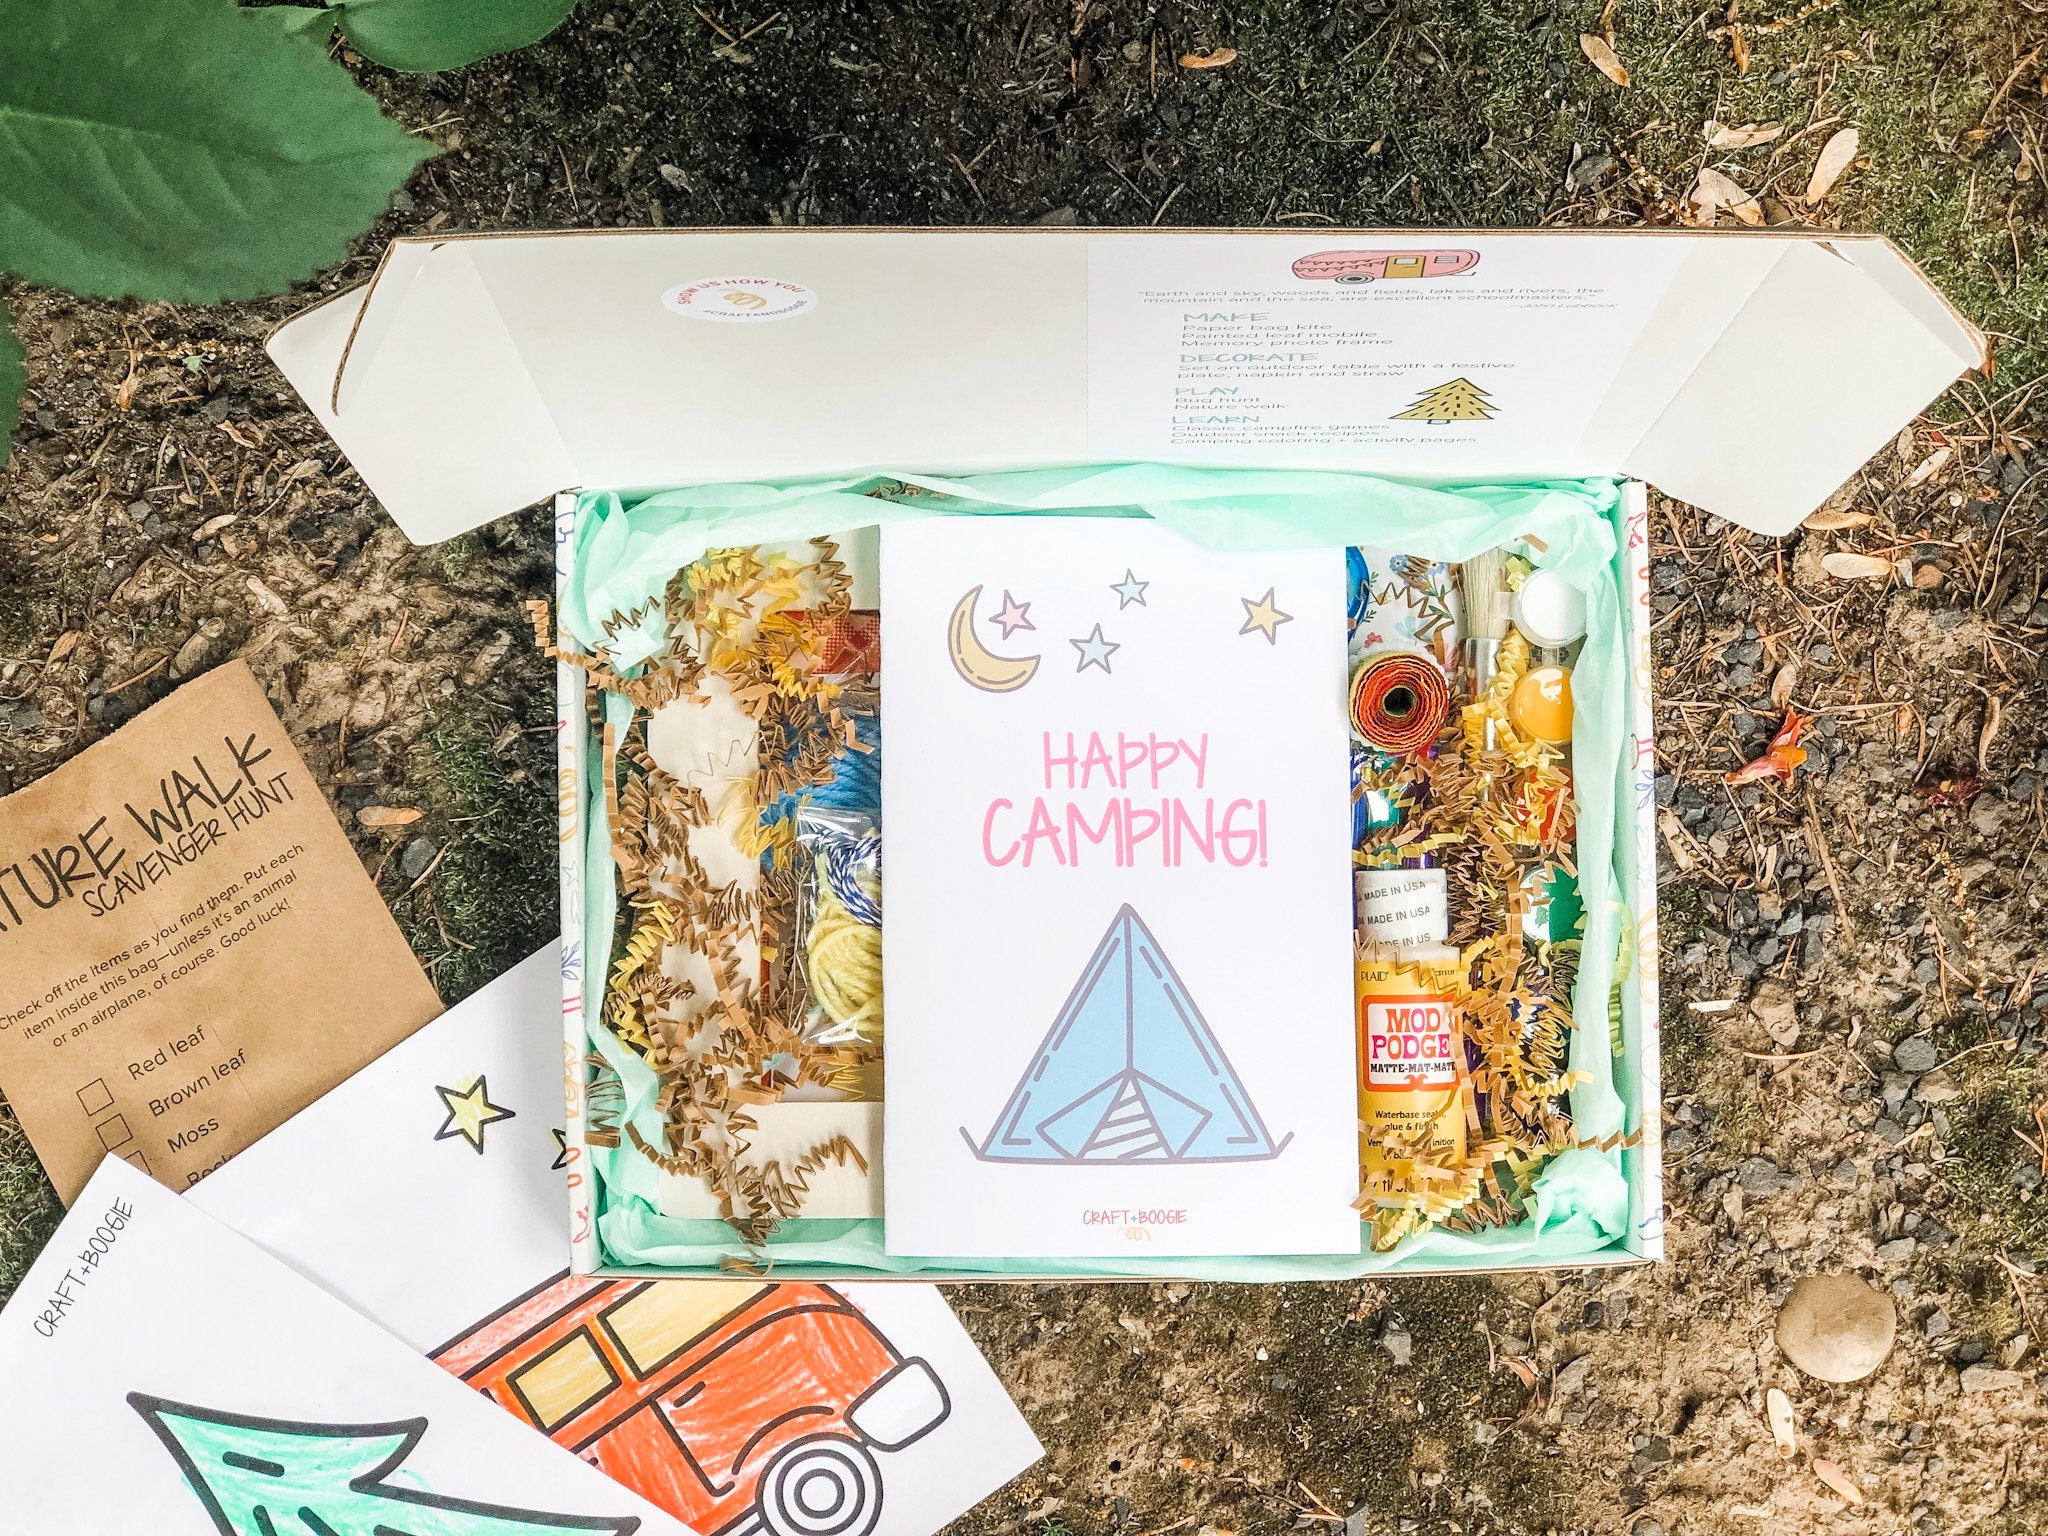 Camping Suncatcher Kit Craft Kids Craft Kit Art Project DIY Craft Kit Gift  for Kids Outdoor Activity Camp Theme Birthday 